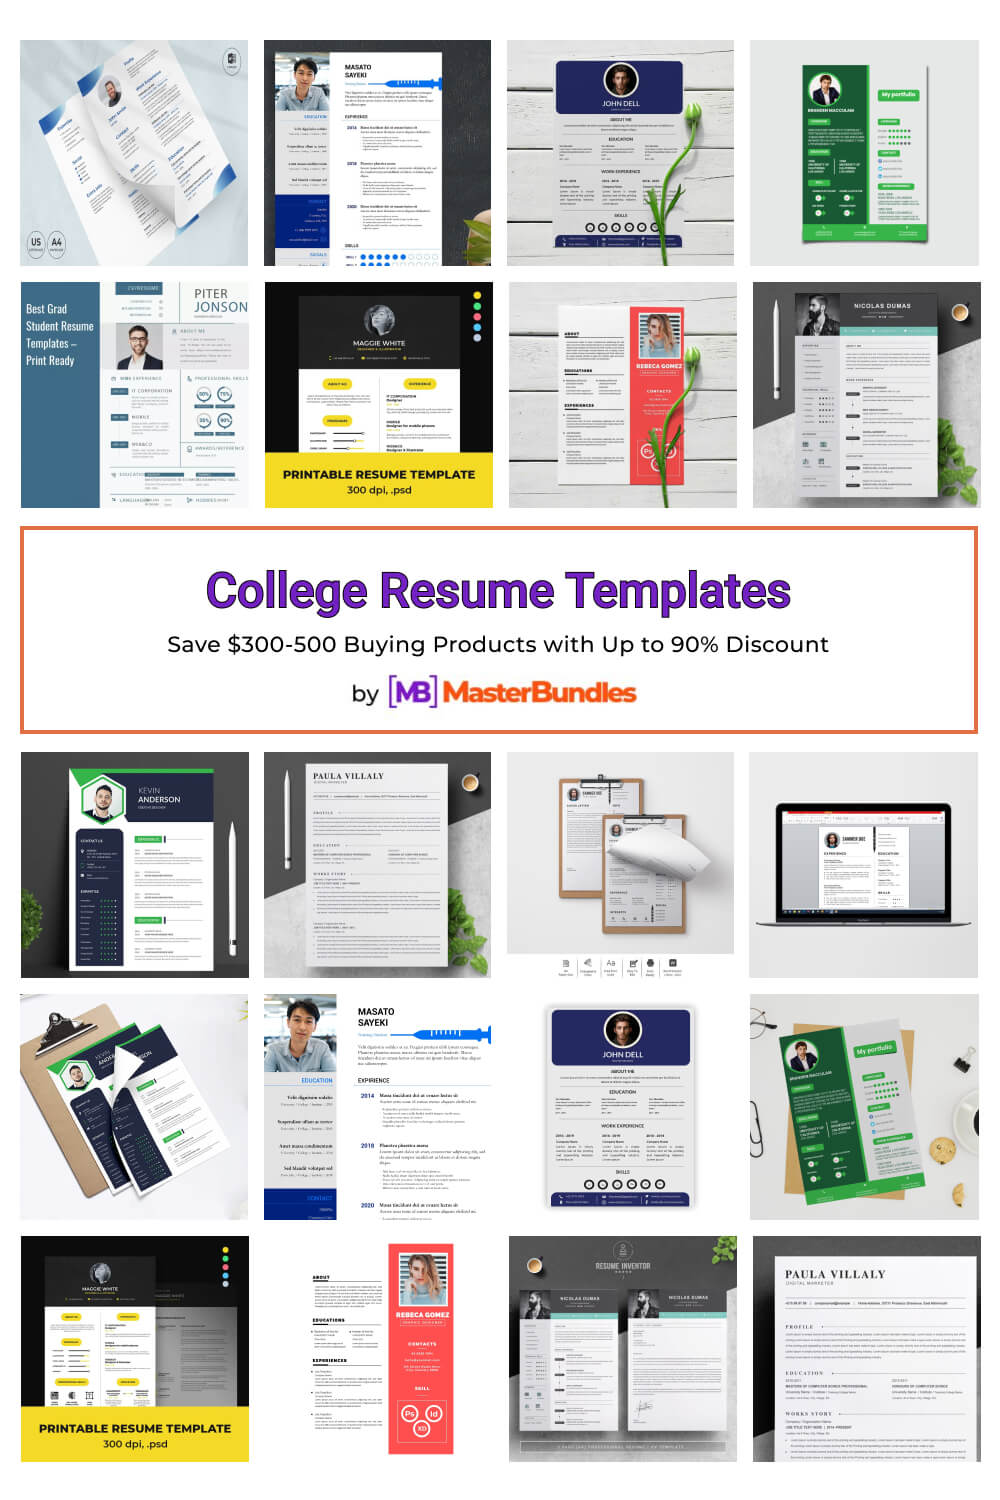 college resume templates pinterest image.